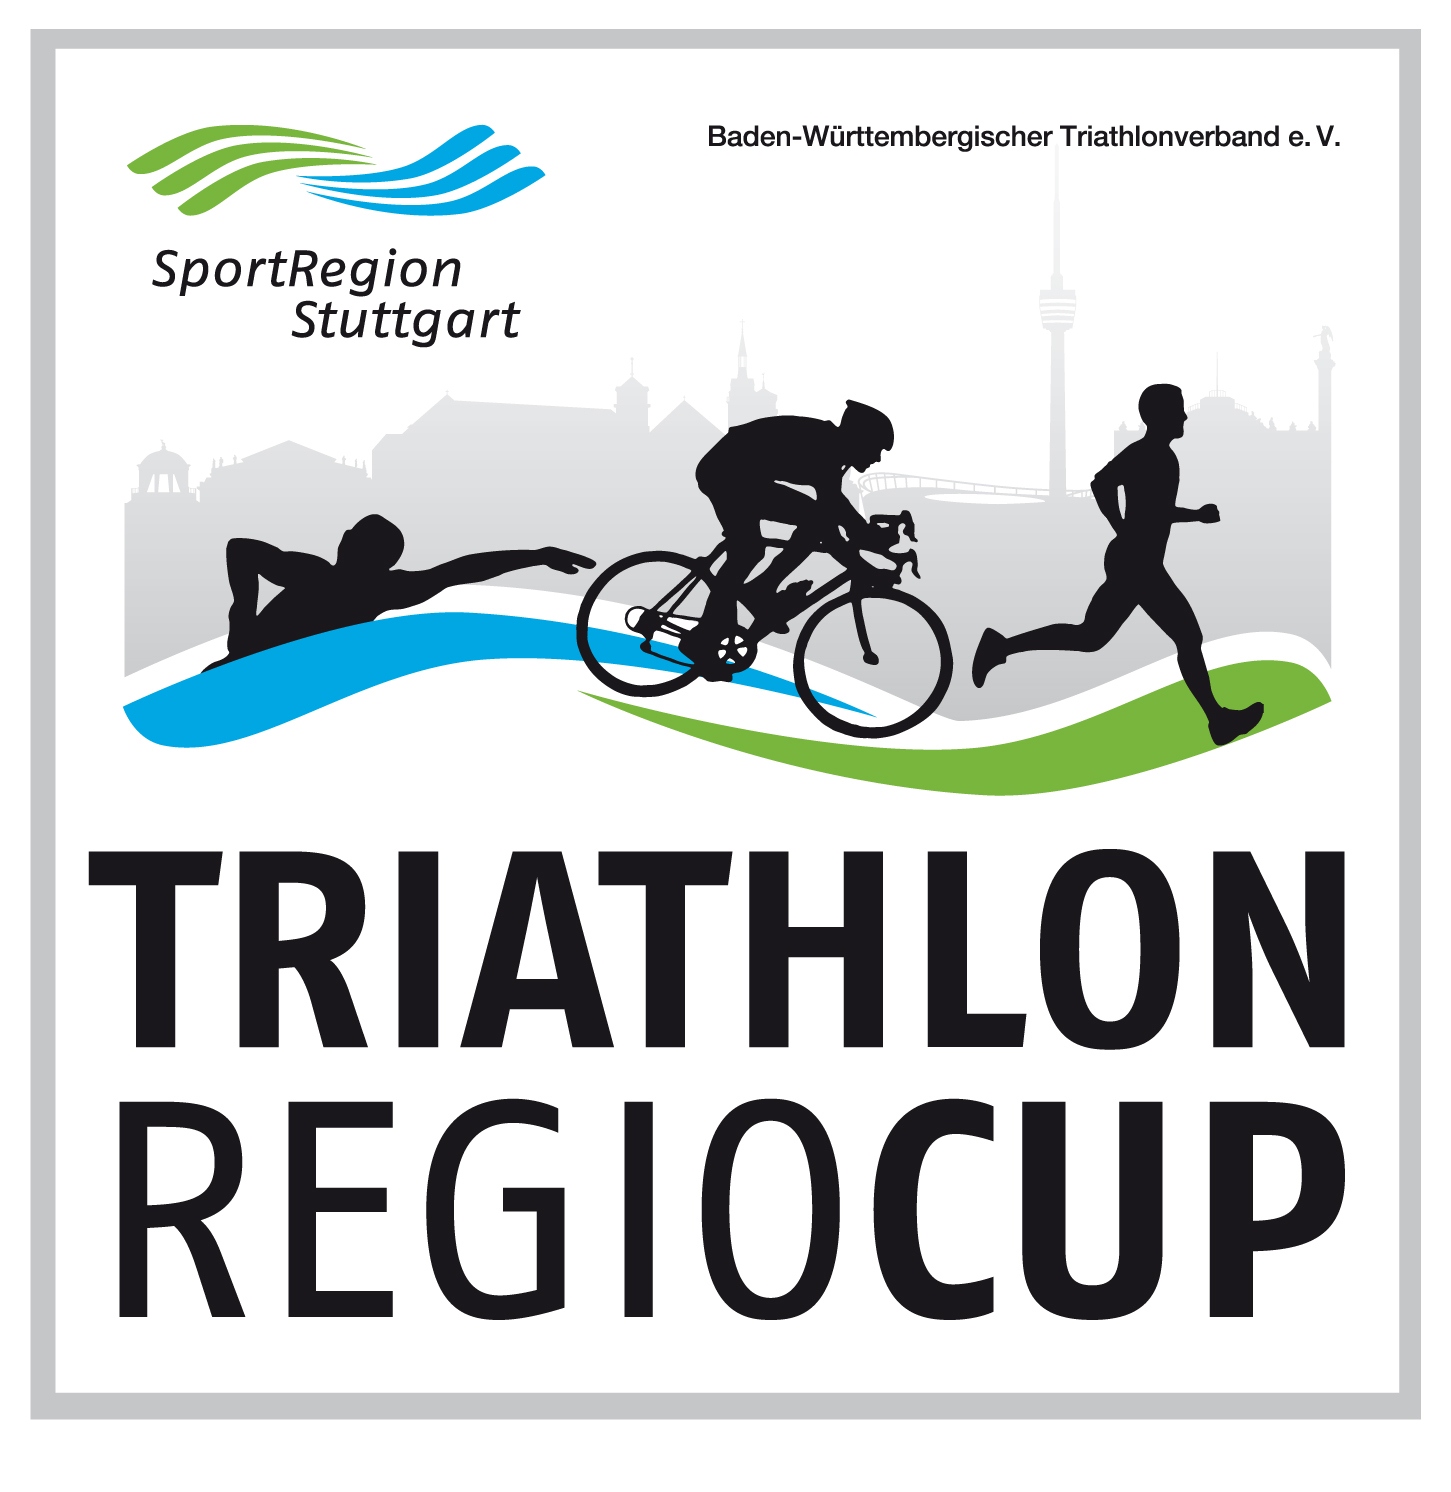 Triathlon RegioCup logo